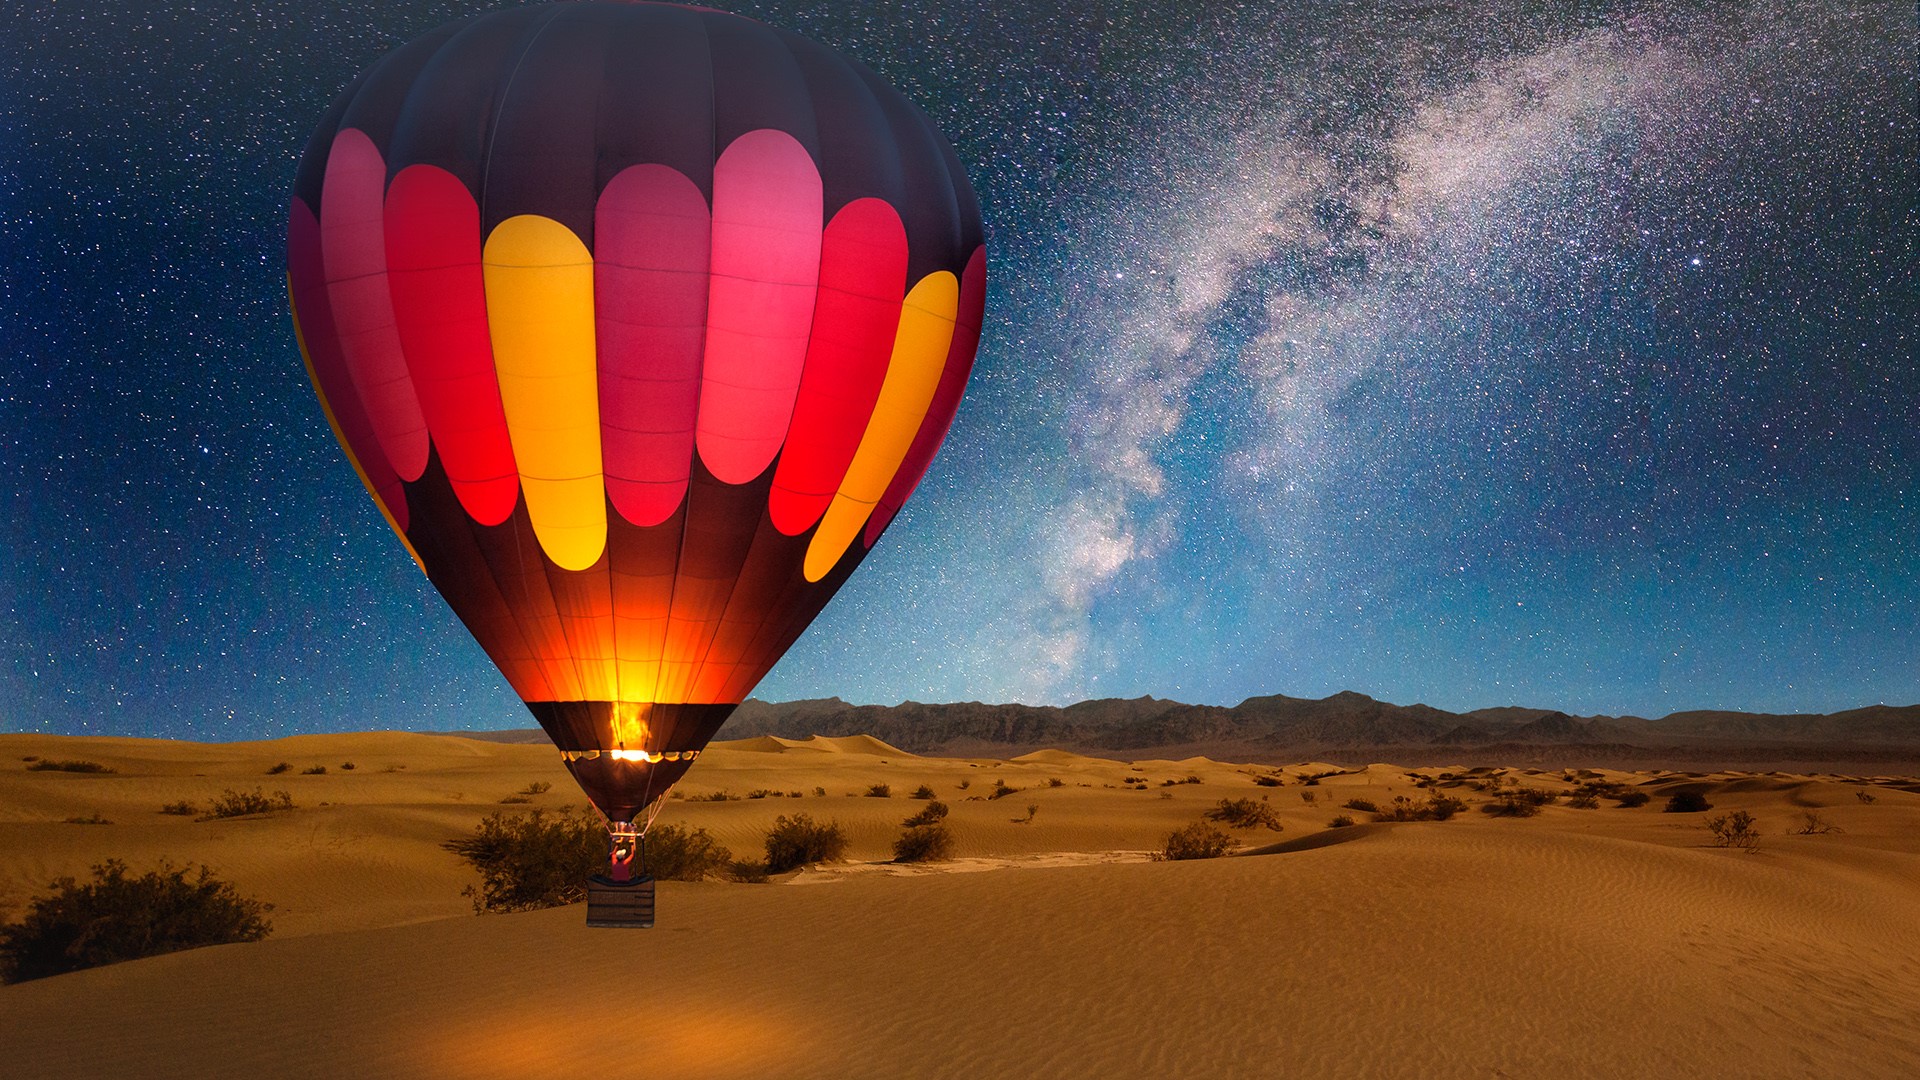 Nature Landscape Hot Air Balloons Sand Plants Stars Night Galaxy Milky Way Dunes Death Valley Califo 1920x1080